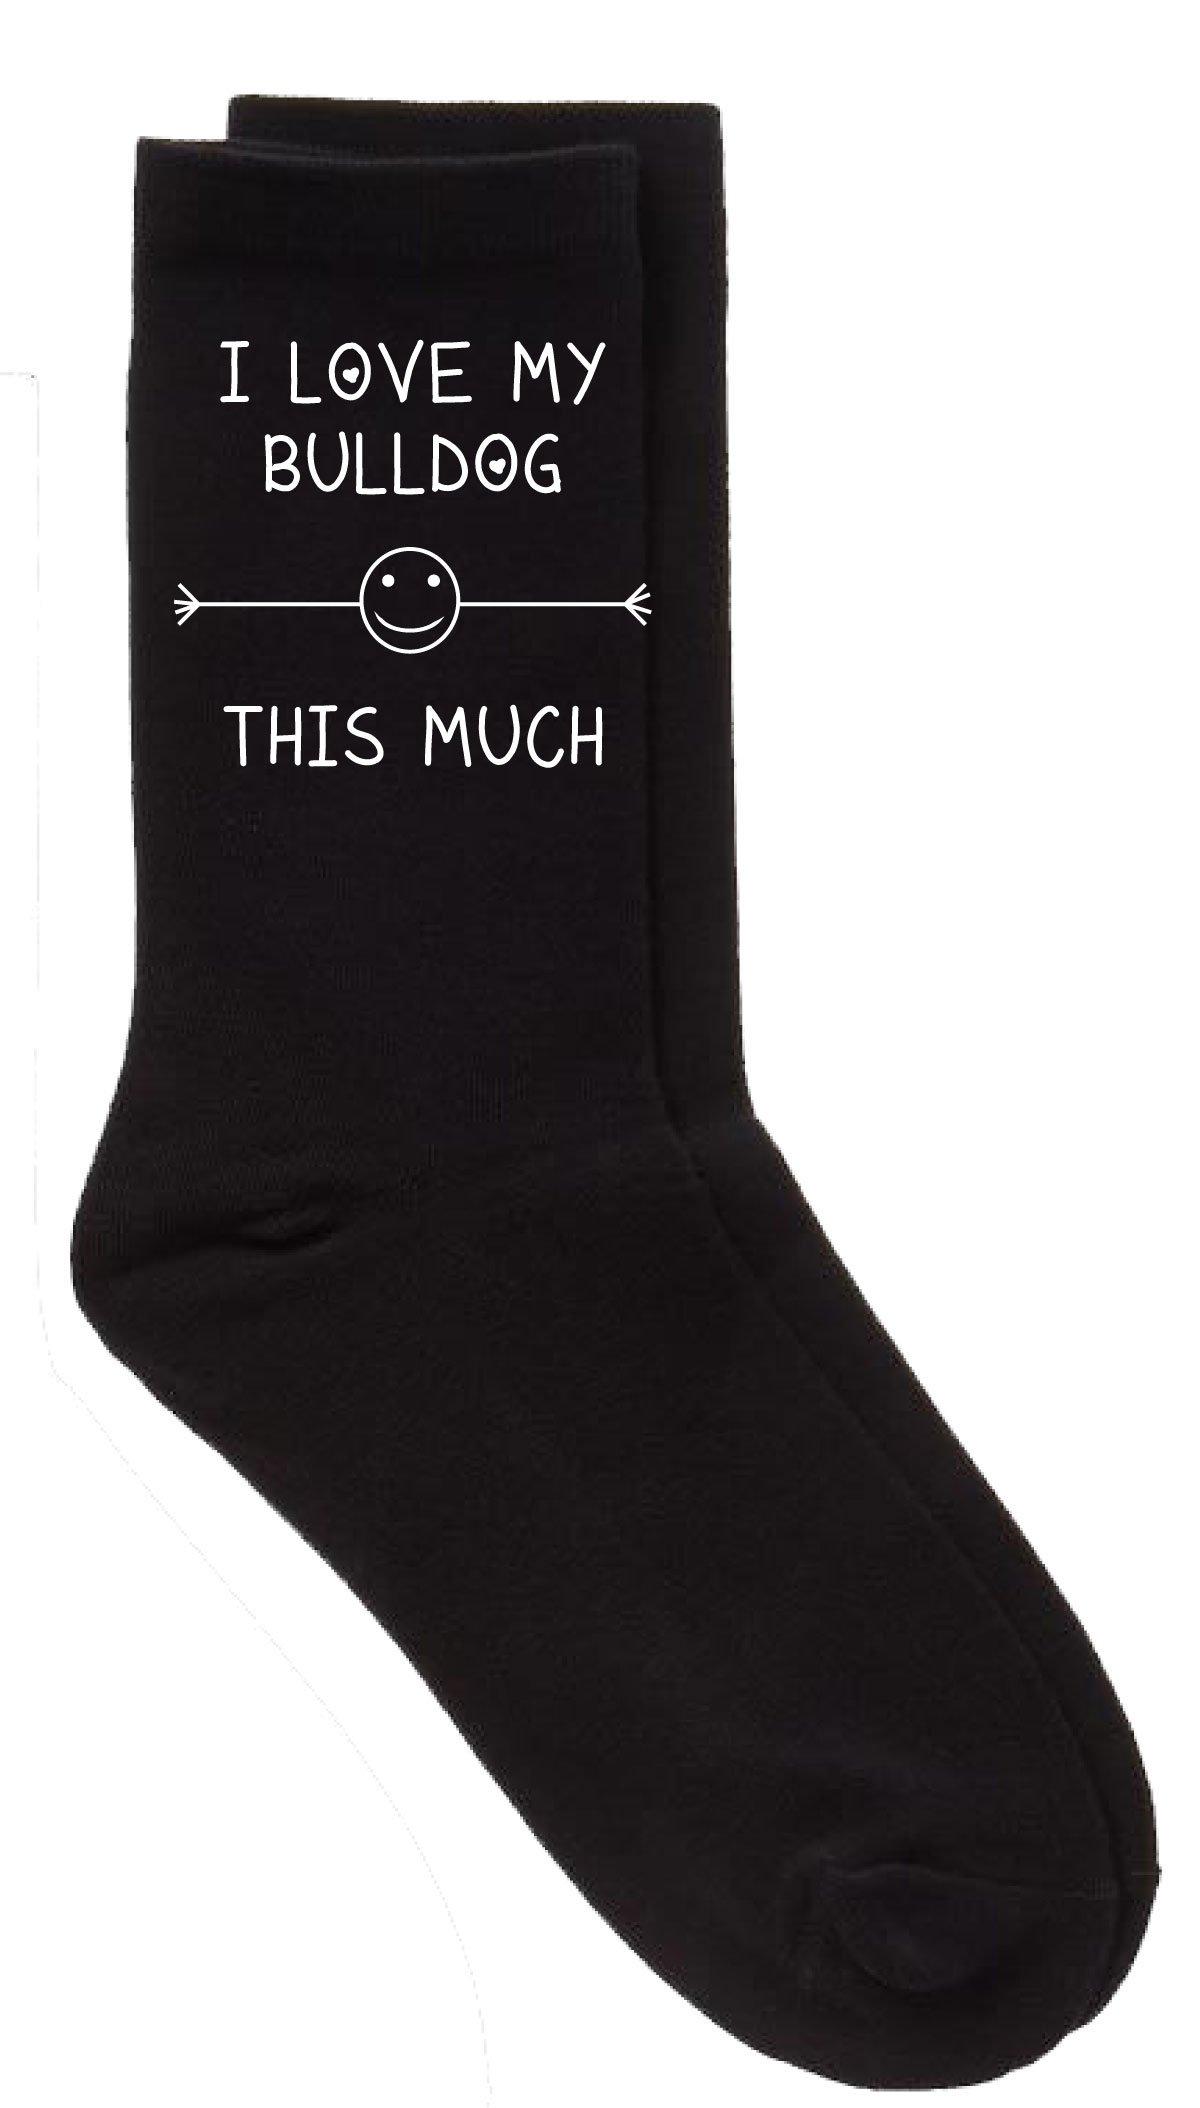 I Love My Bulldog This Much Socks